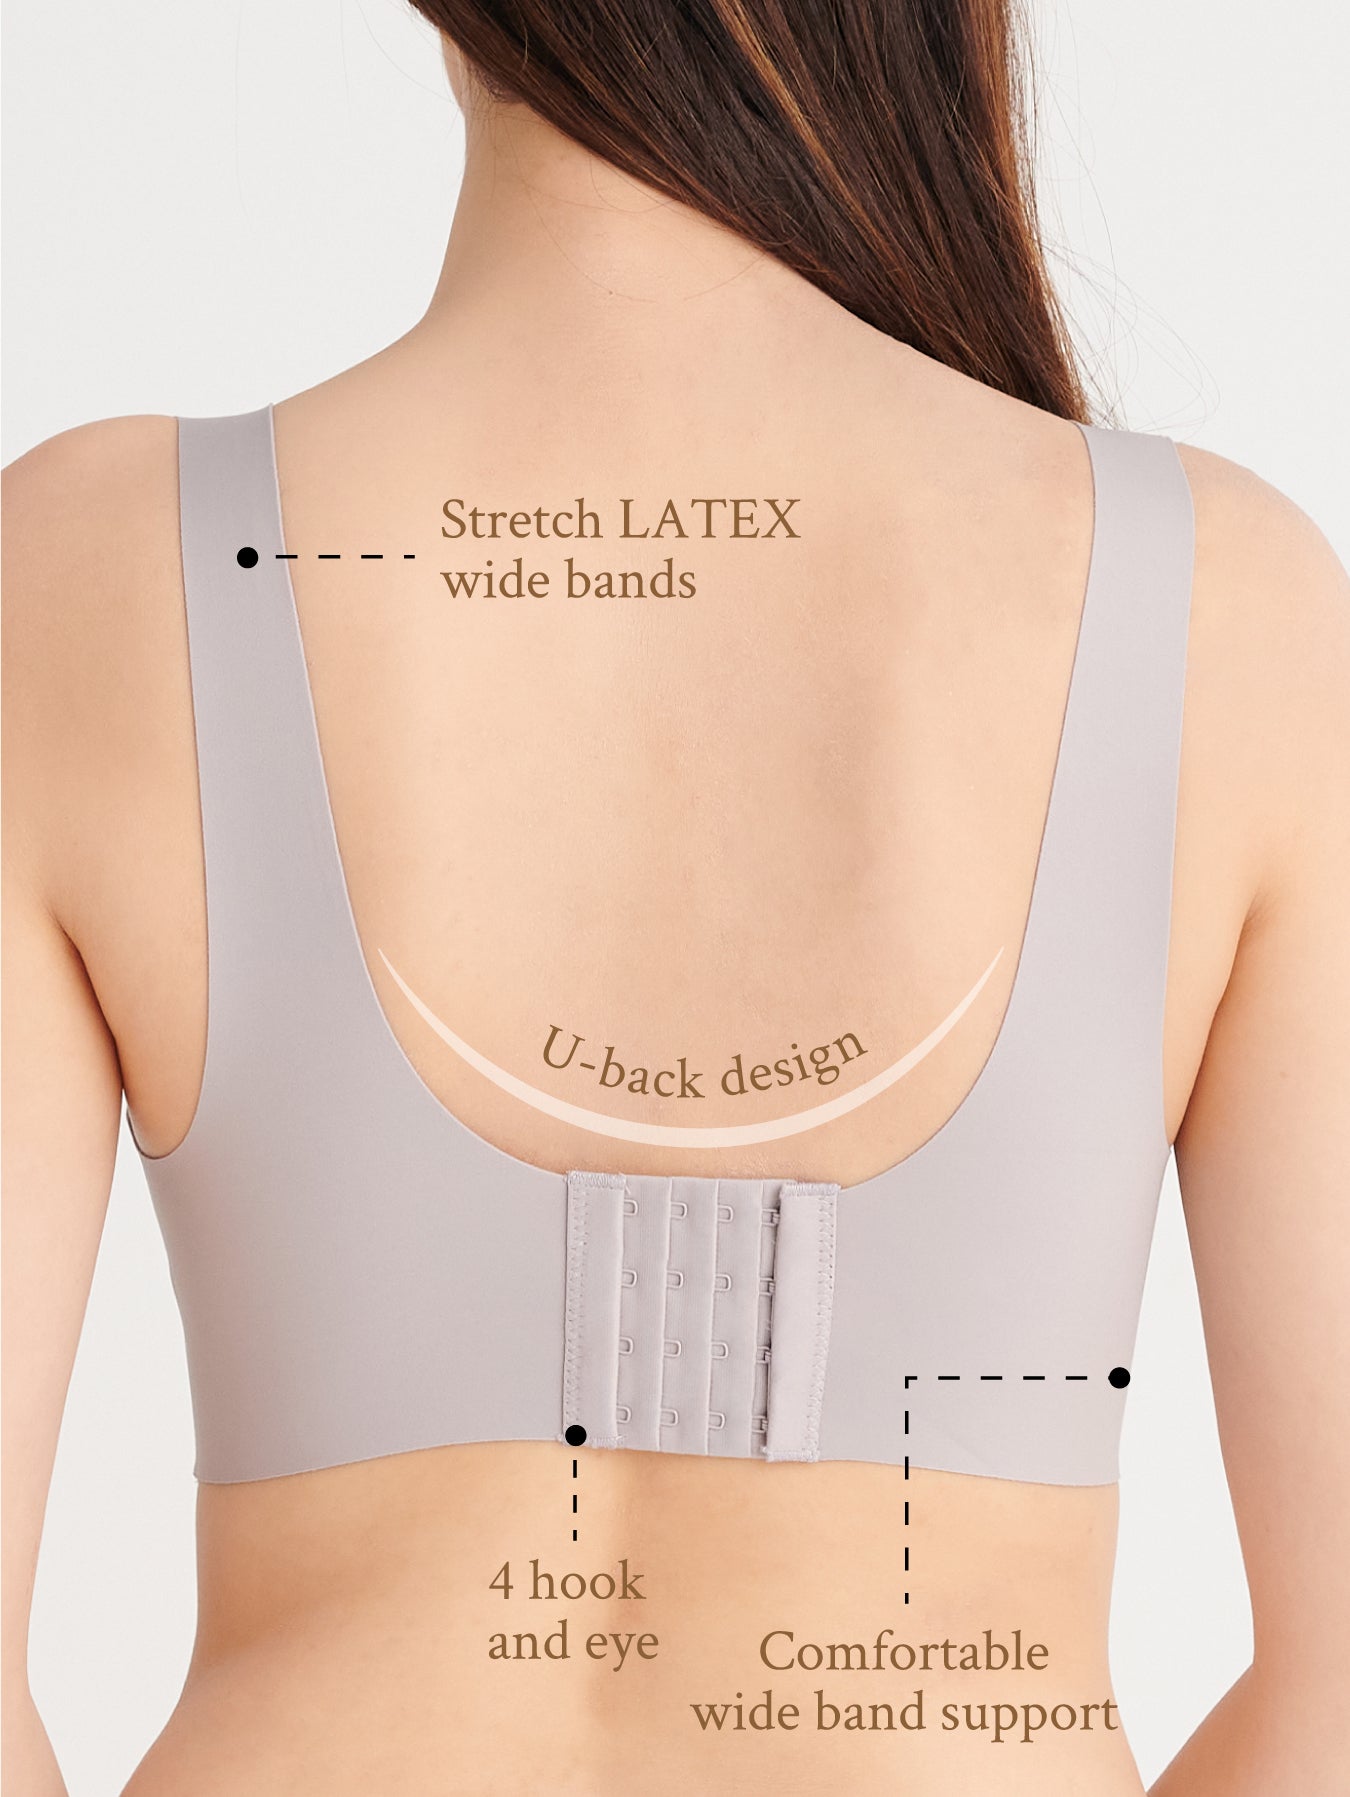 Comfortable nursing bra with latex material